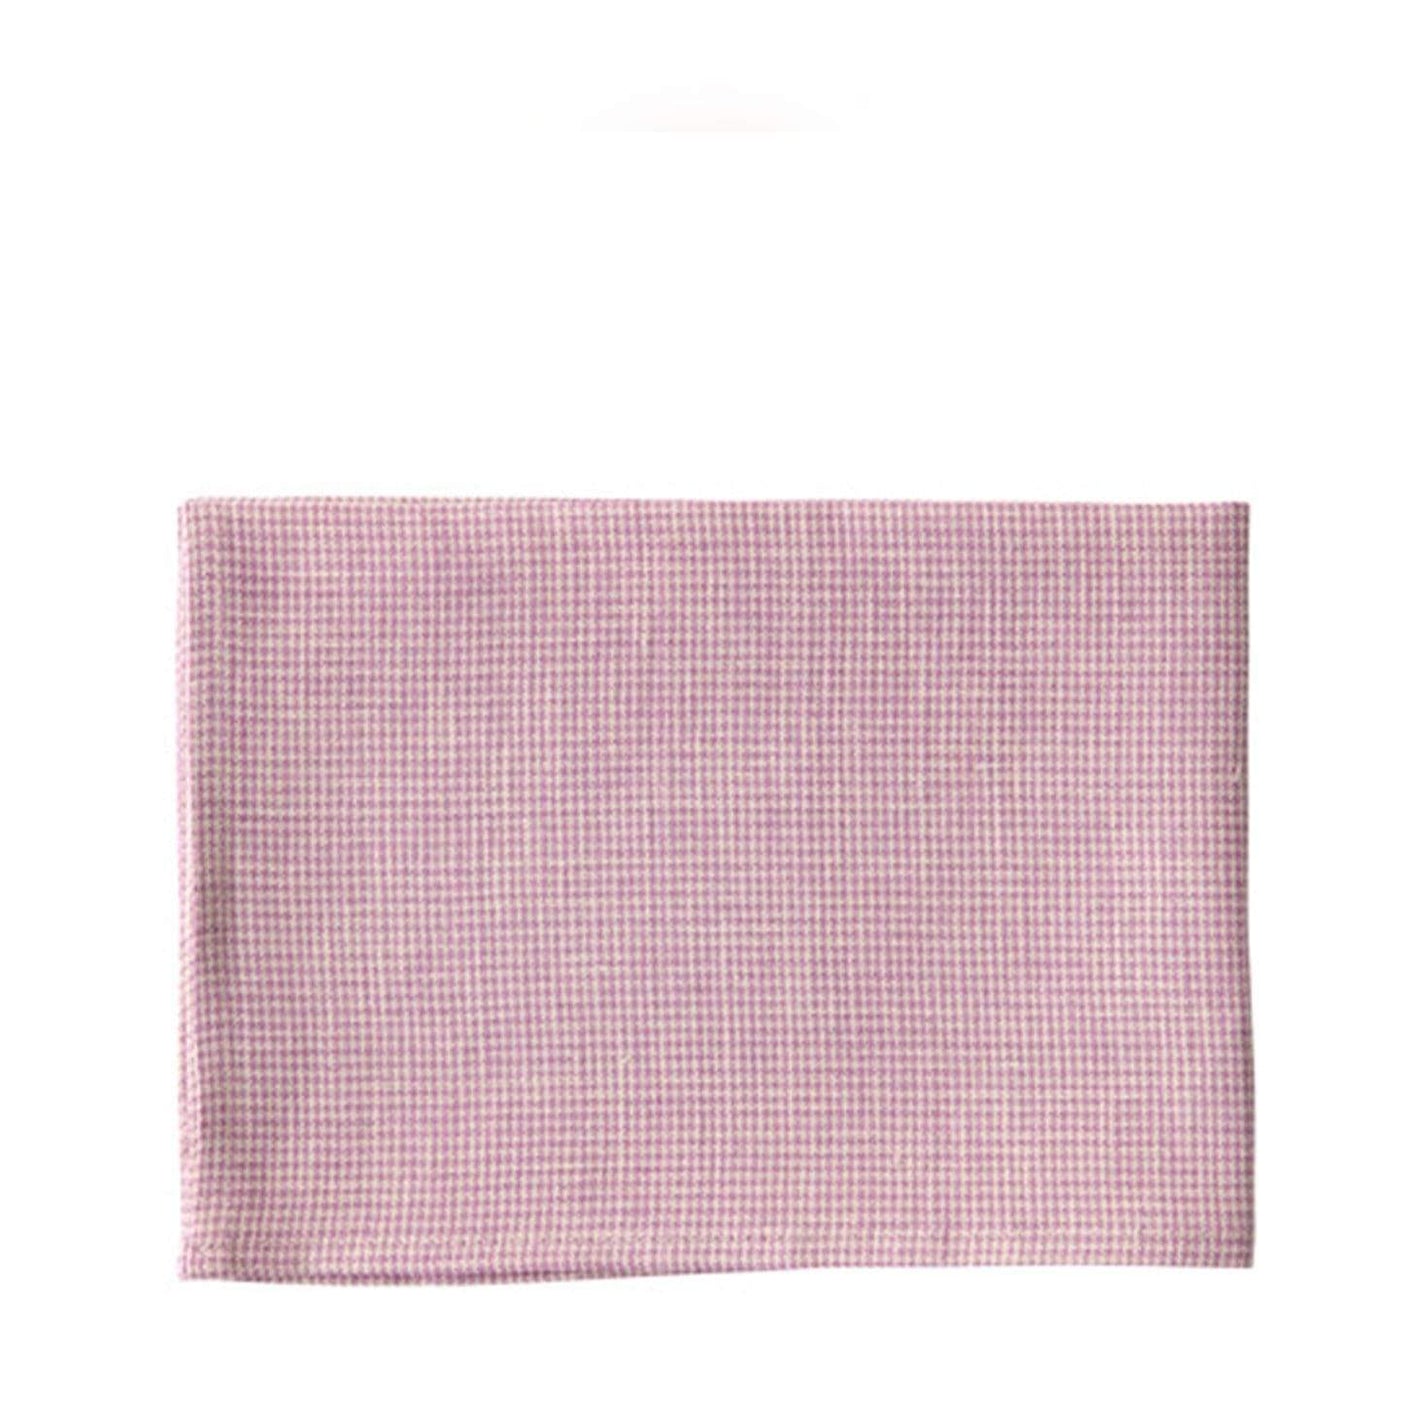 Fog Linen Work Tea Towel - Emiley